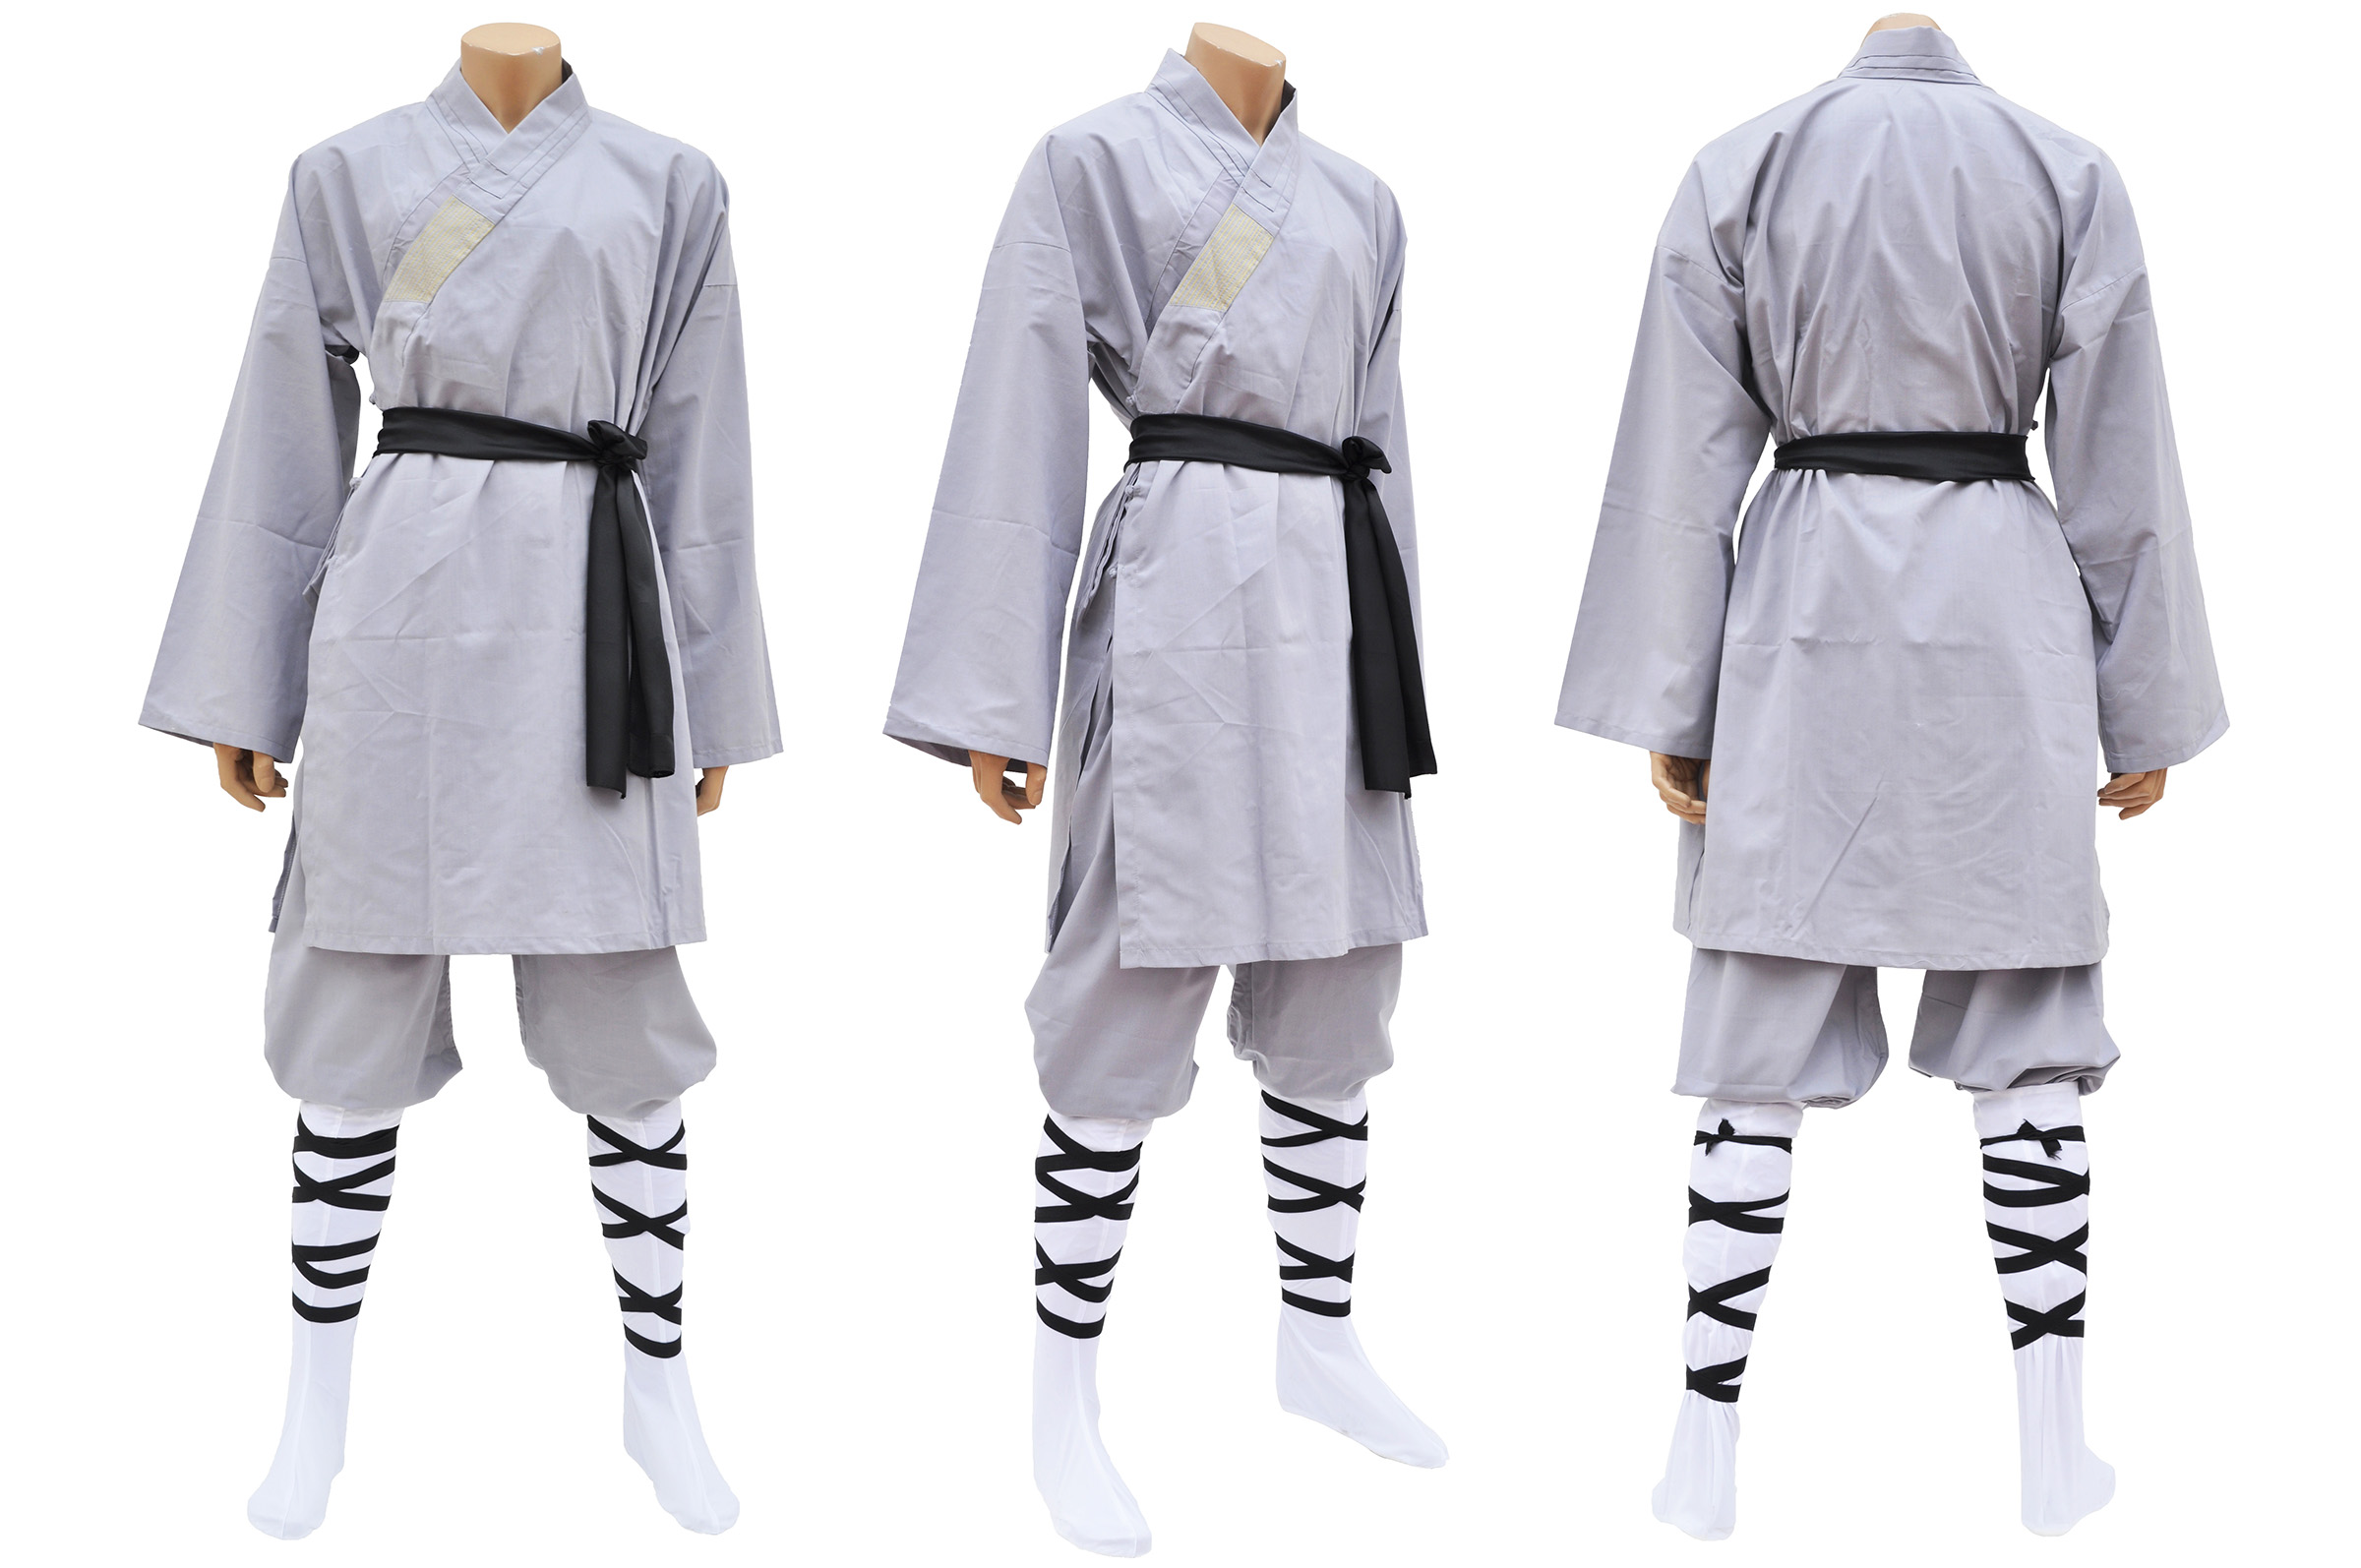 Shaolin Uniform, Grey Cotton 